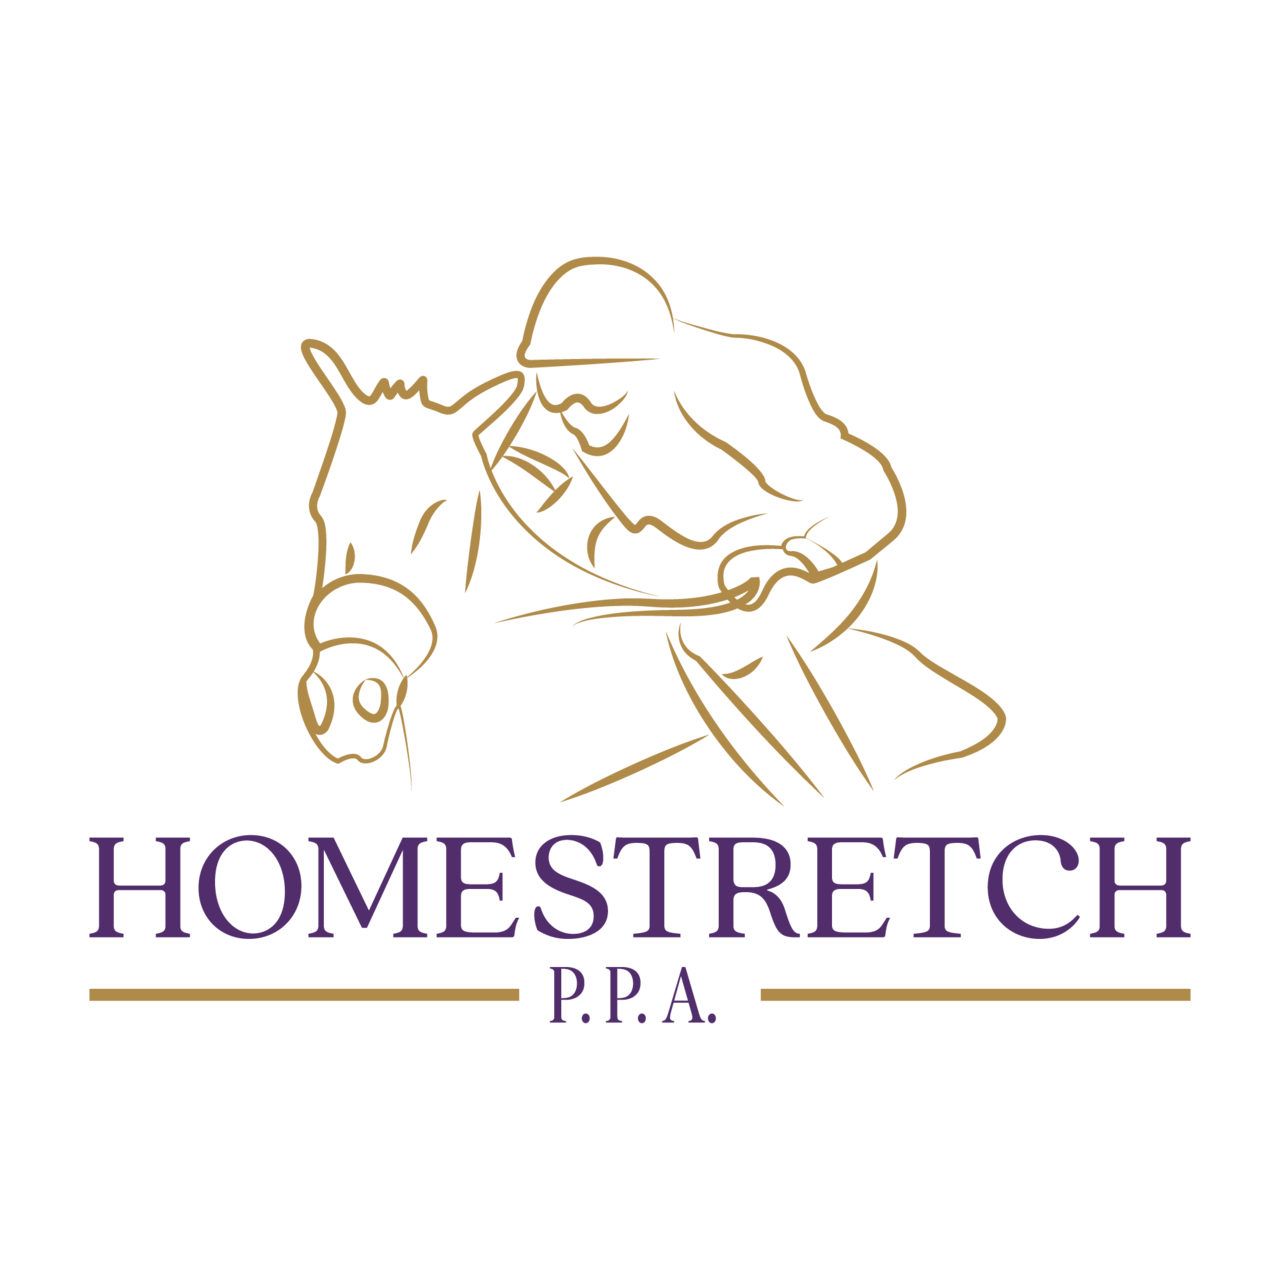 Homestretch PPA Newsletter